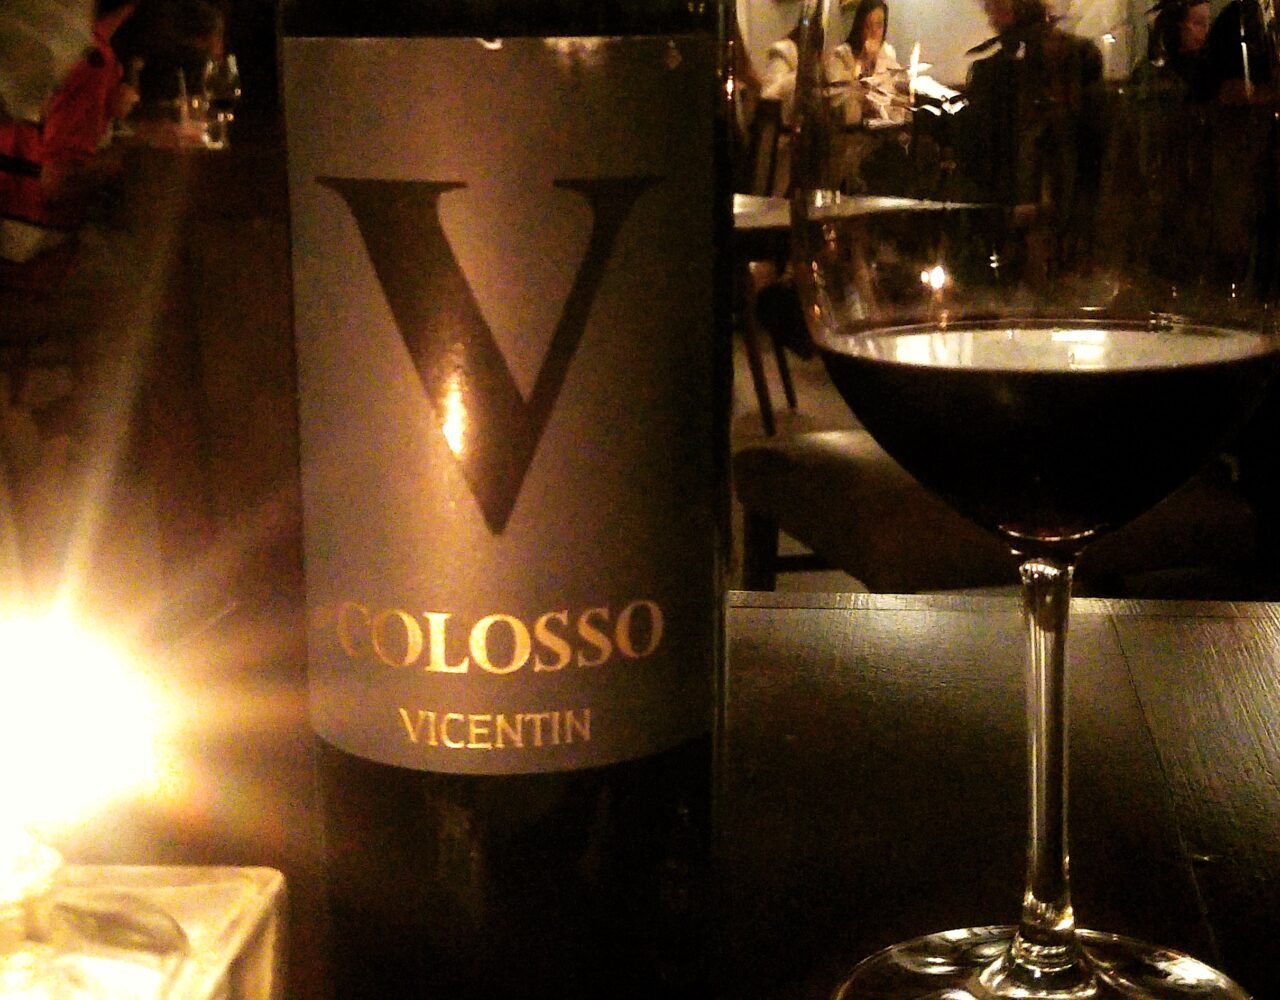 Colosso Vincentin 2012: Review